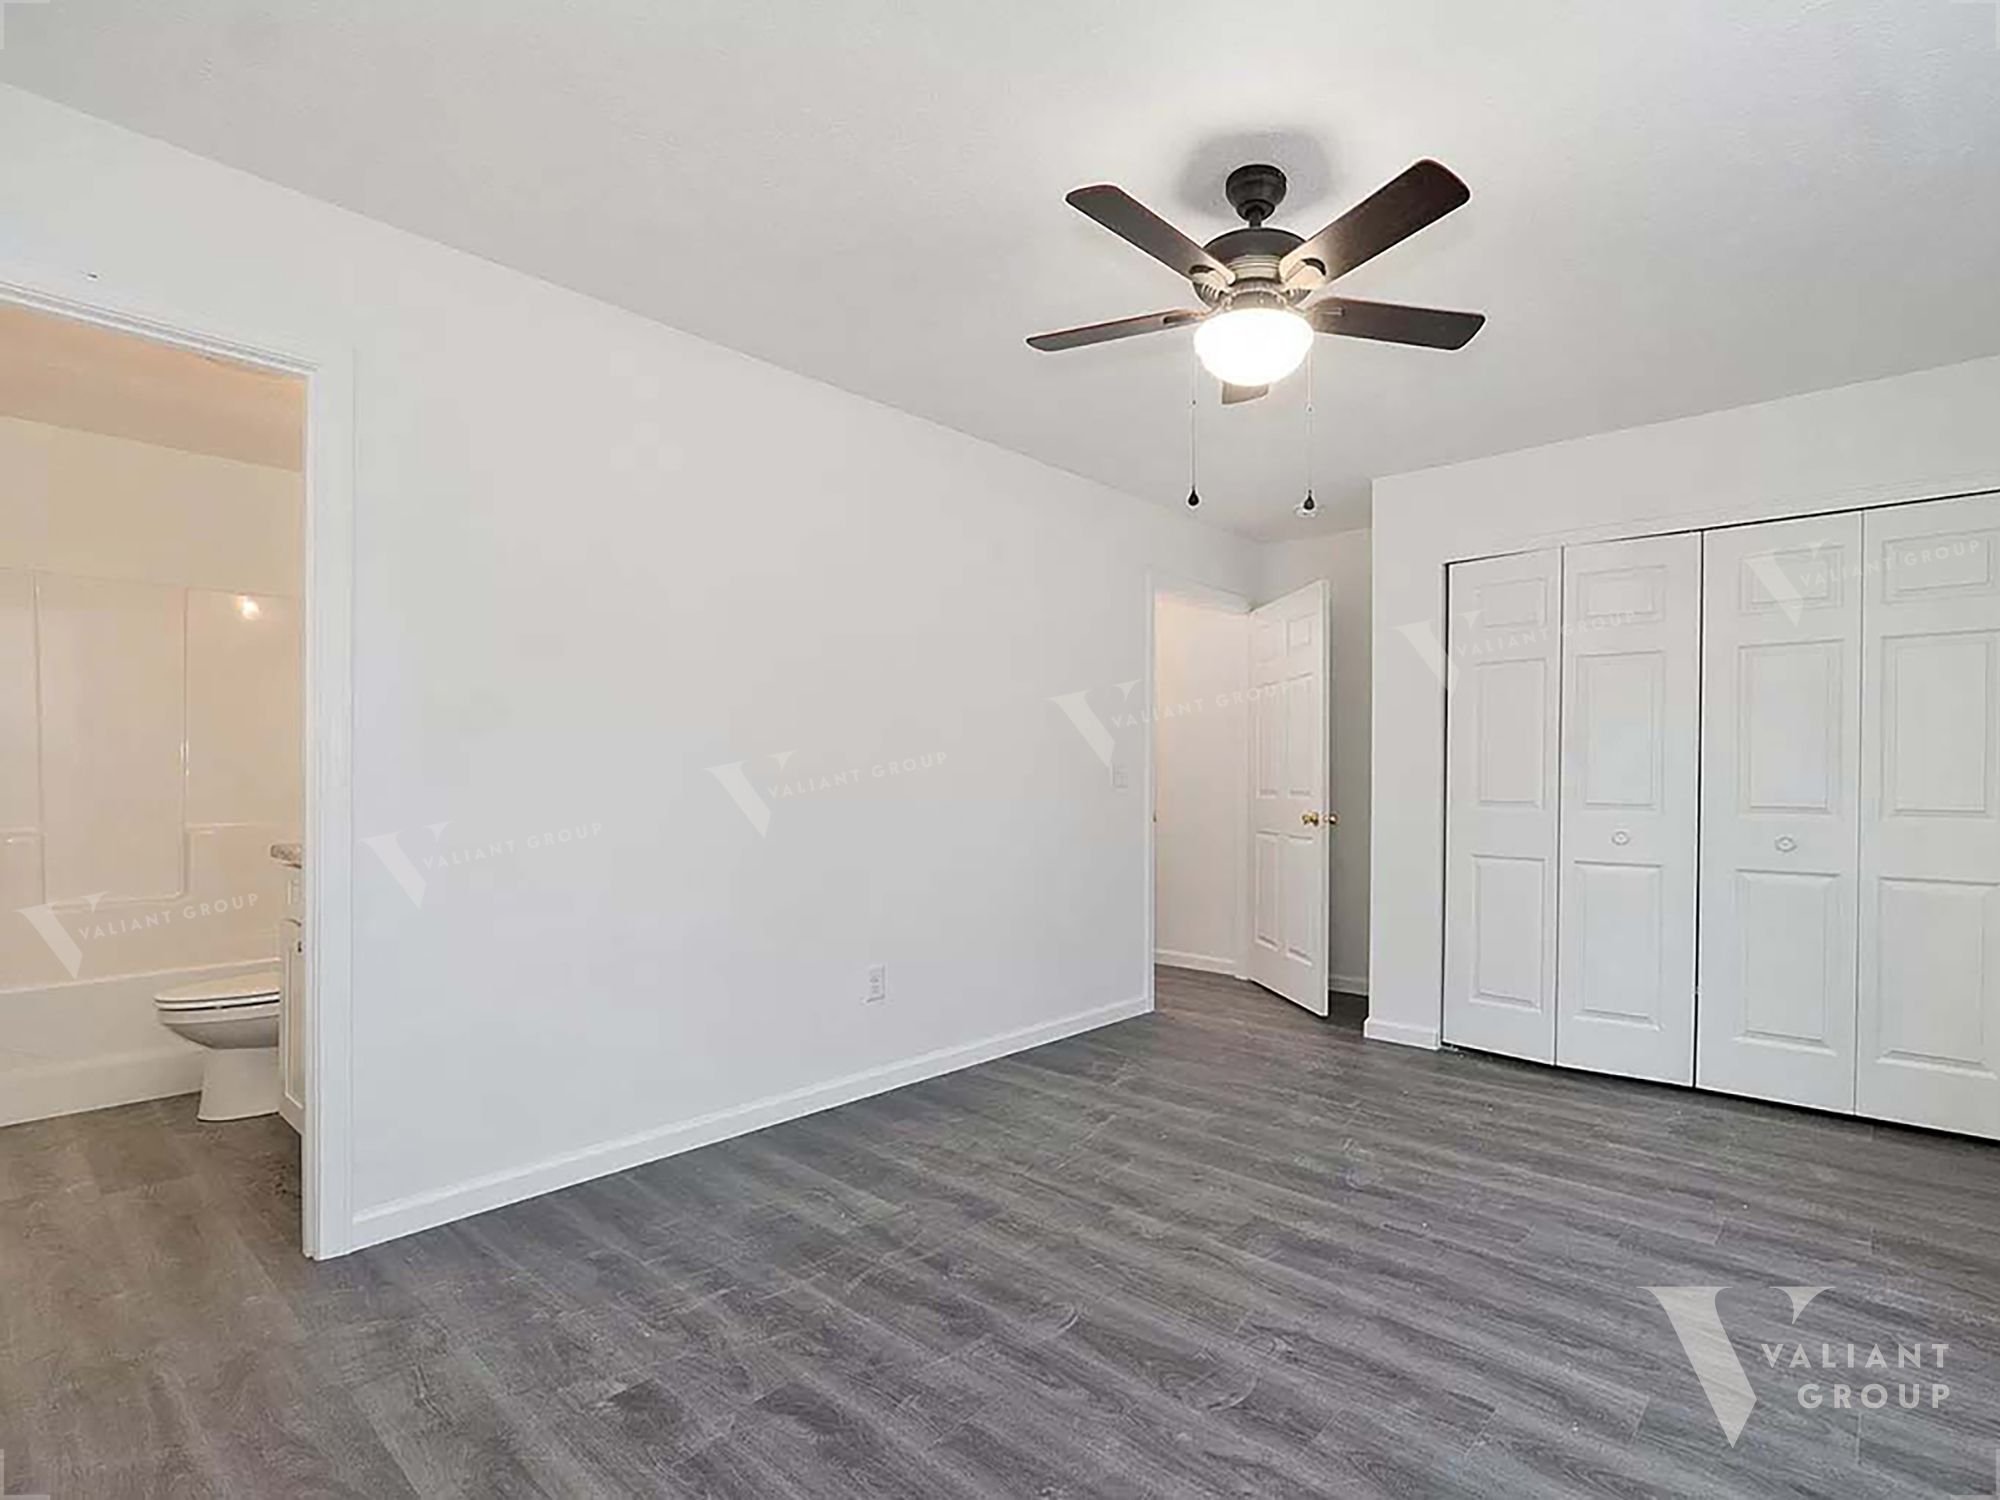 Rental Duplex Springfield MO 1610 W Scott Unit B - primary bedroom.jpg